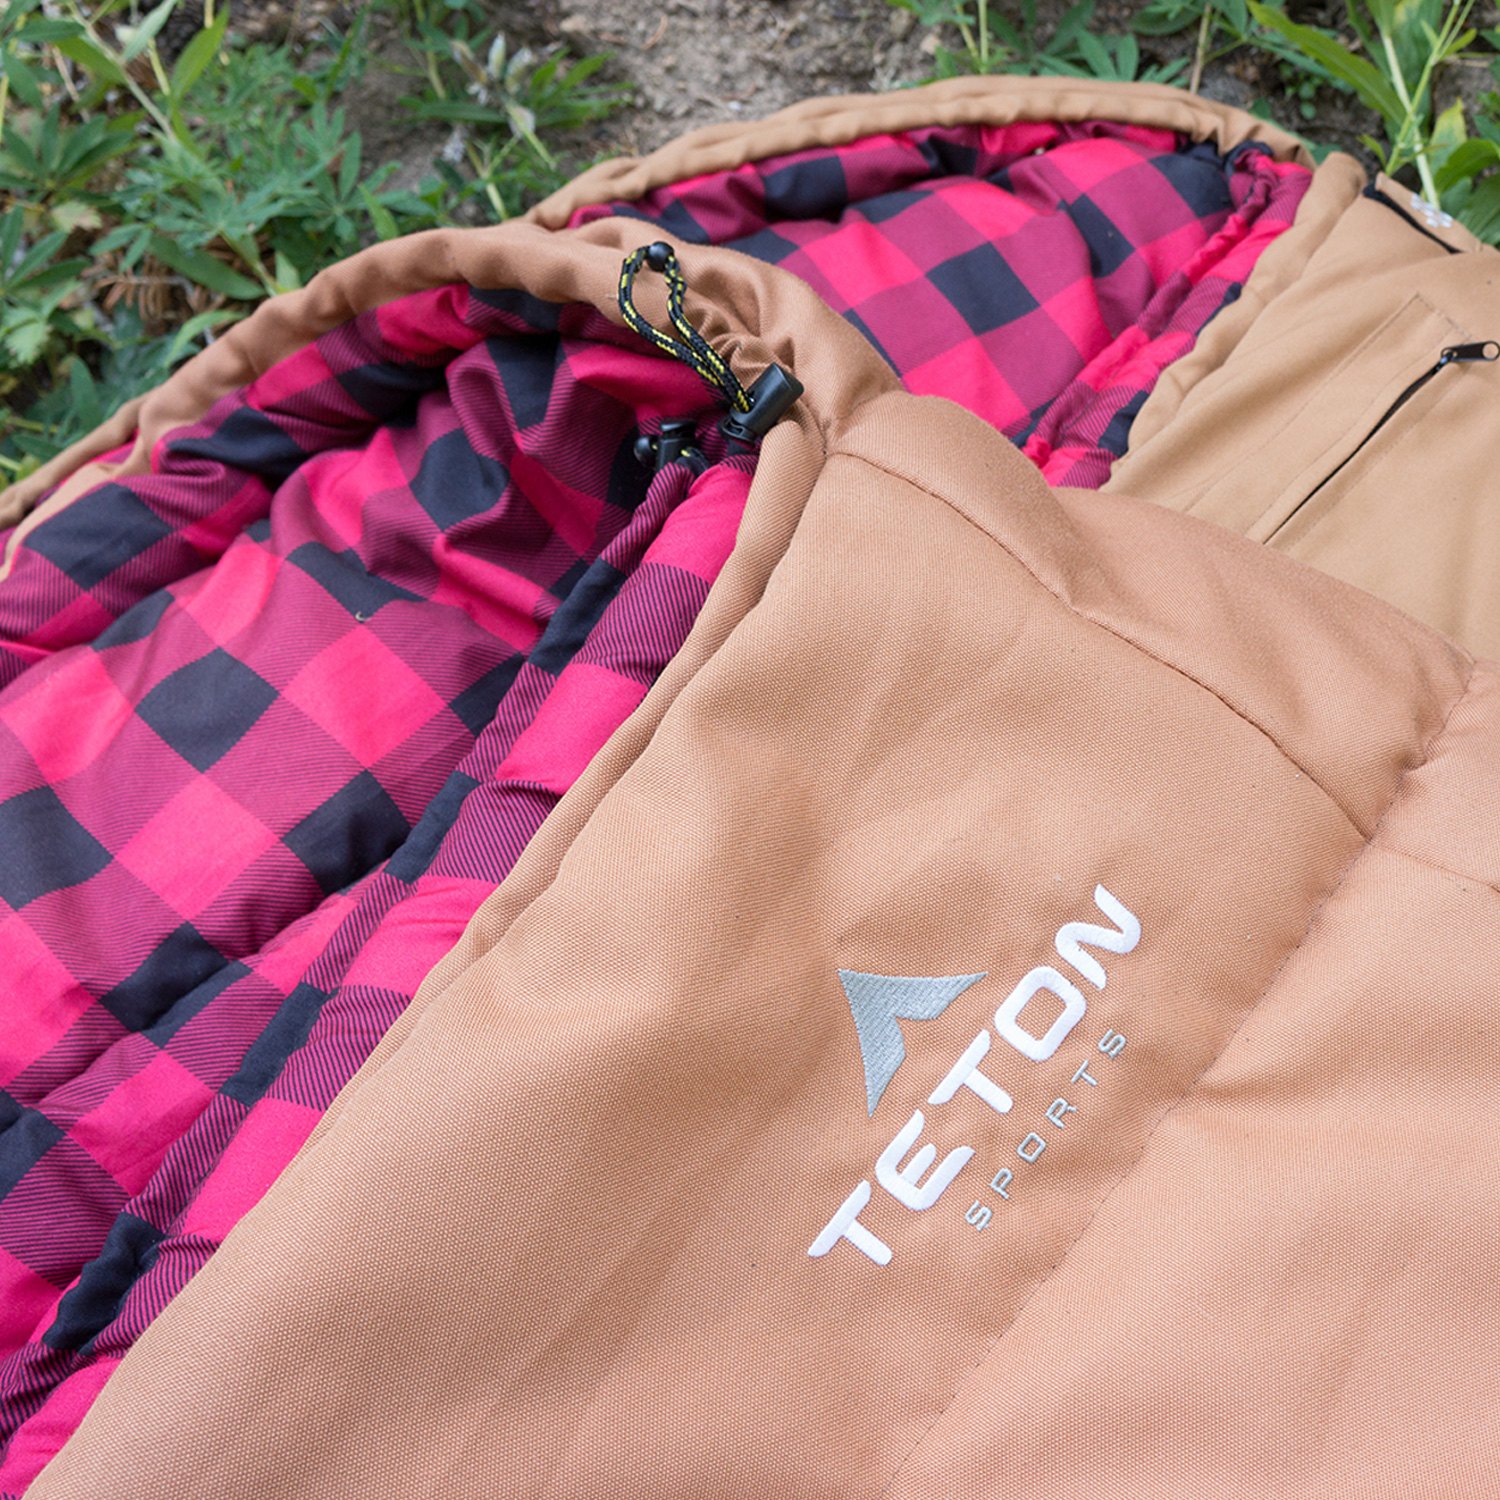 teton sports deer hunter sleeping bag